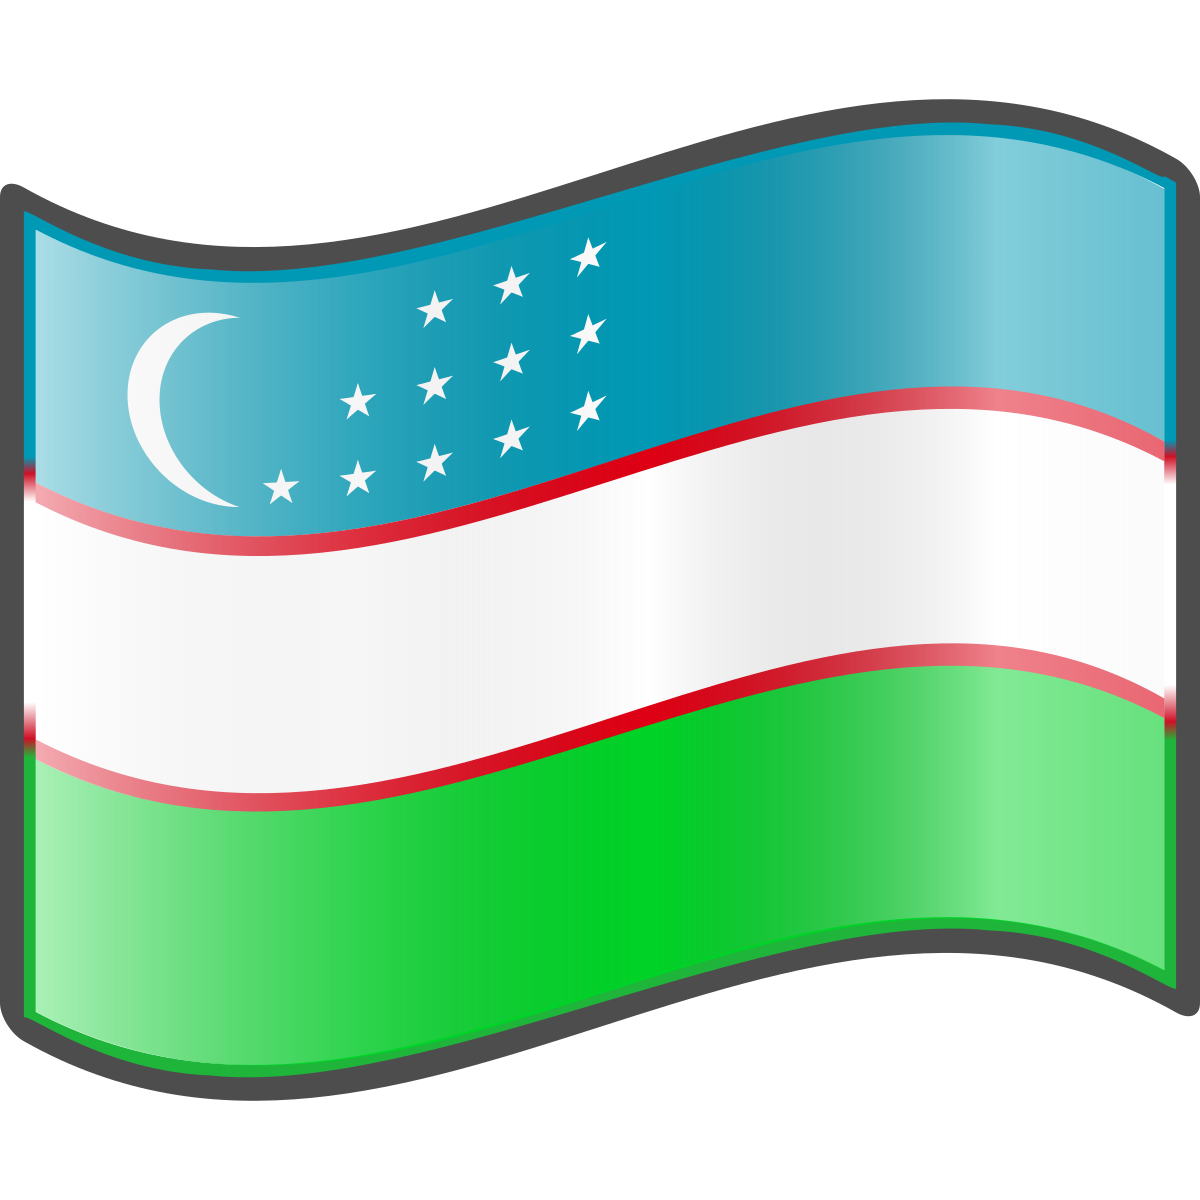 Bayroq rasmi. Узбекистан флаг СВГ. Флаг Узбекистана иконка. Флаг Узбекистана svg. Флаг Узбекистана PNG.